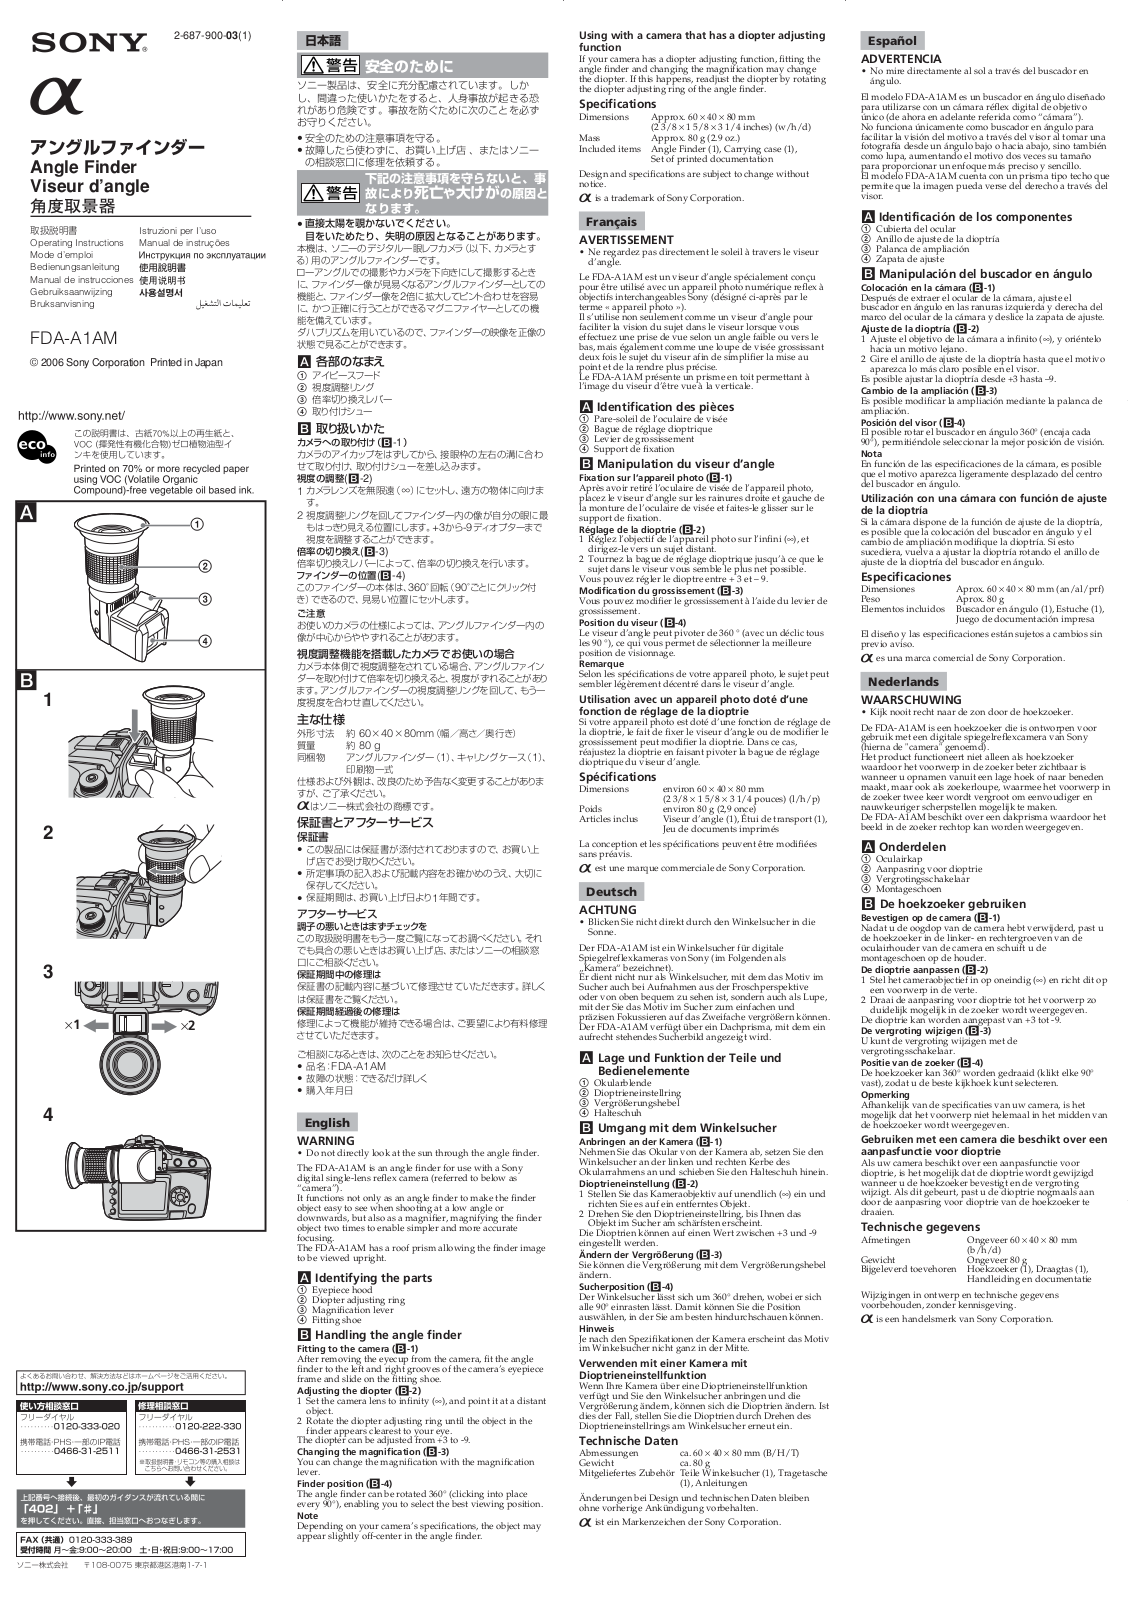 SONY FDA-A1AM User Manual